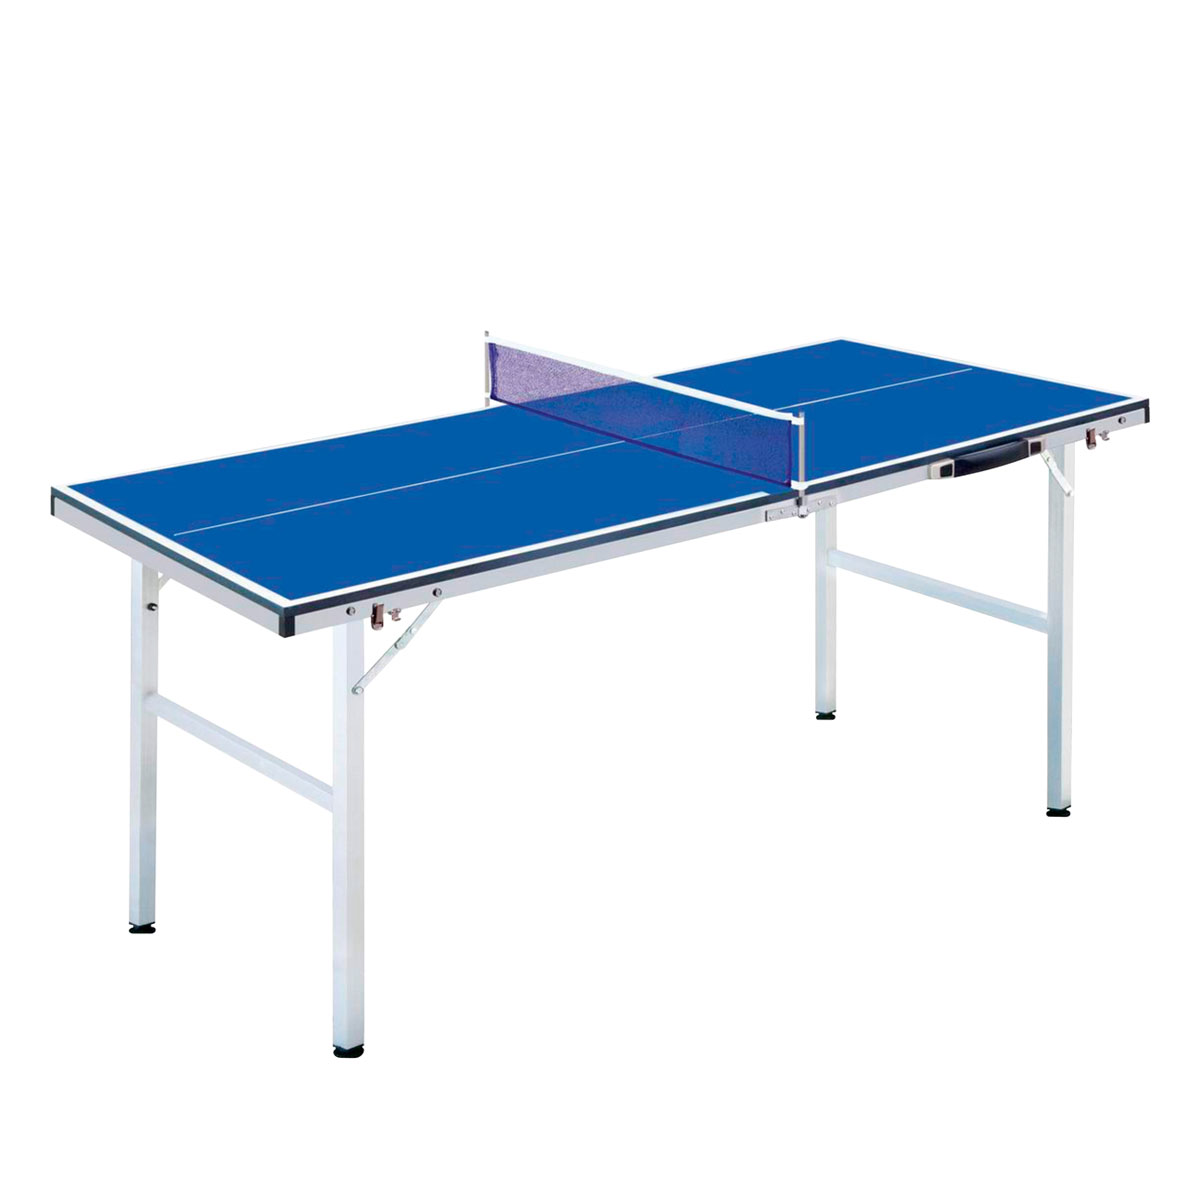 Mini table de Ping-pong pliable et portable avec 1 filet 2